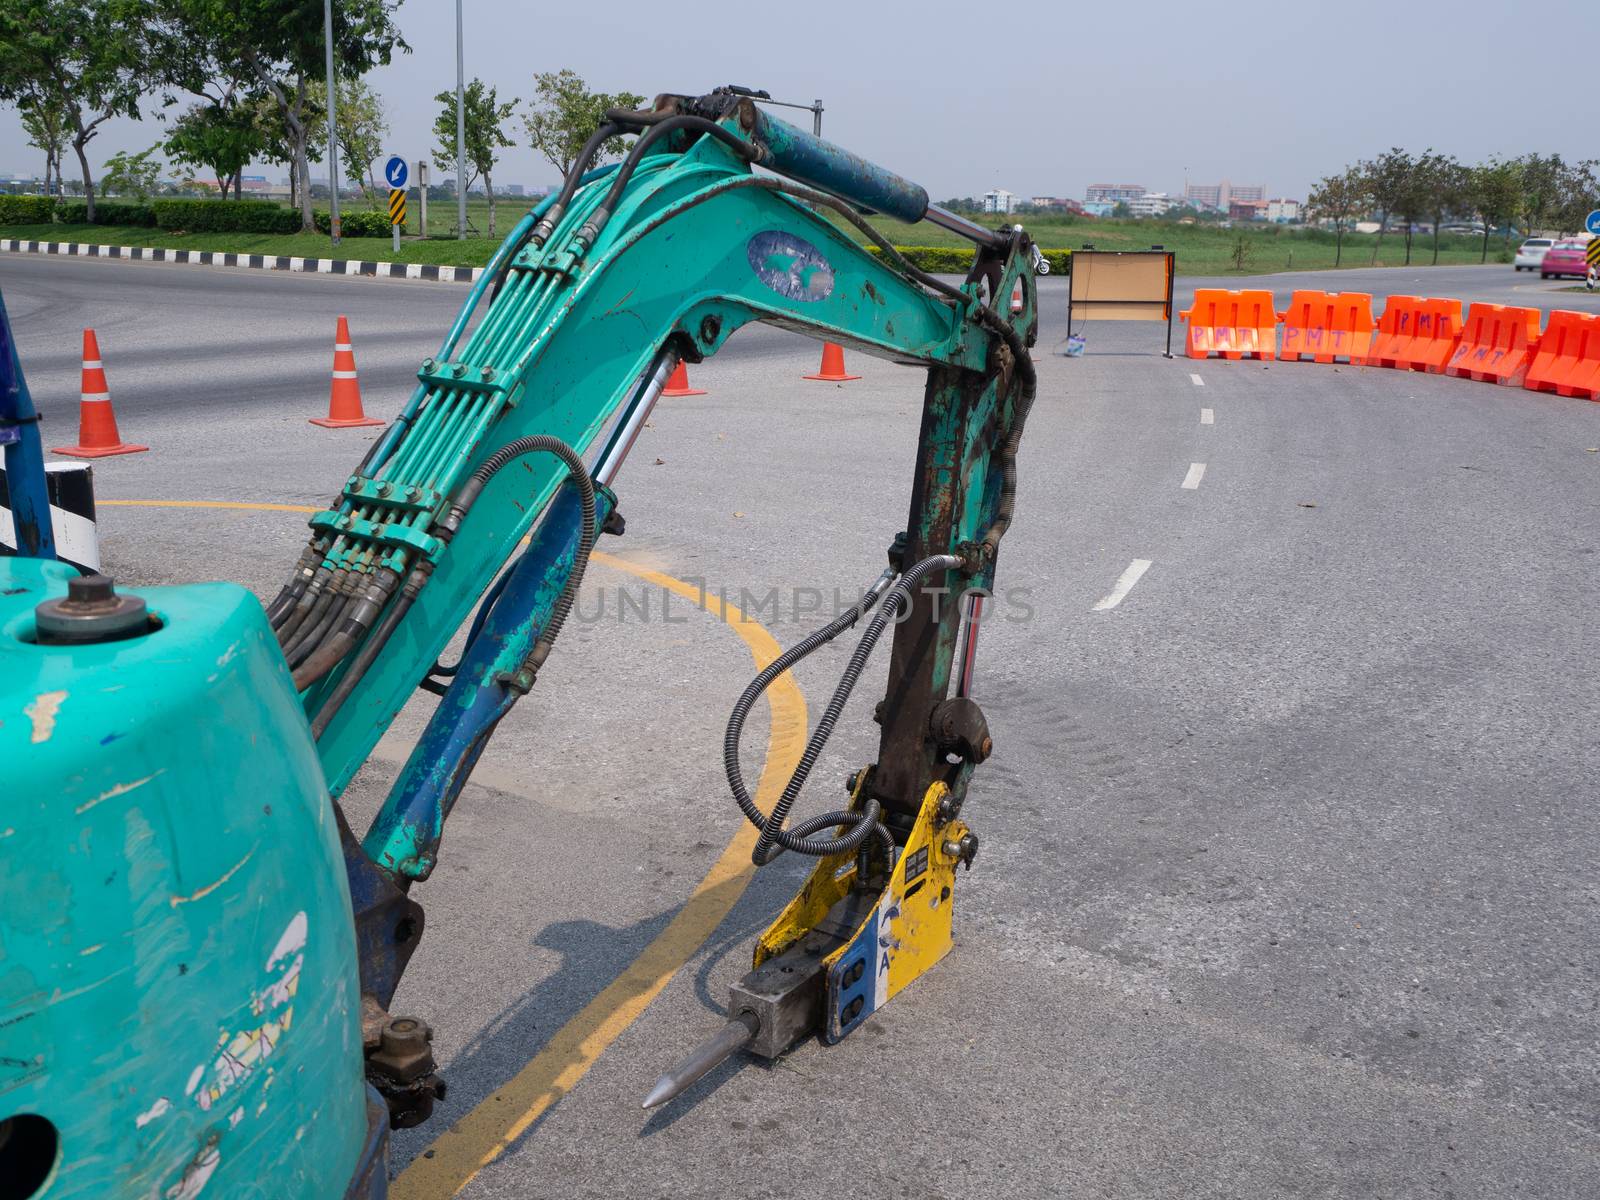 Road works  building site excavator